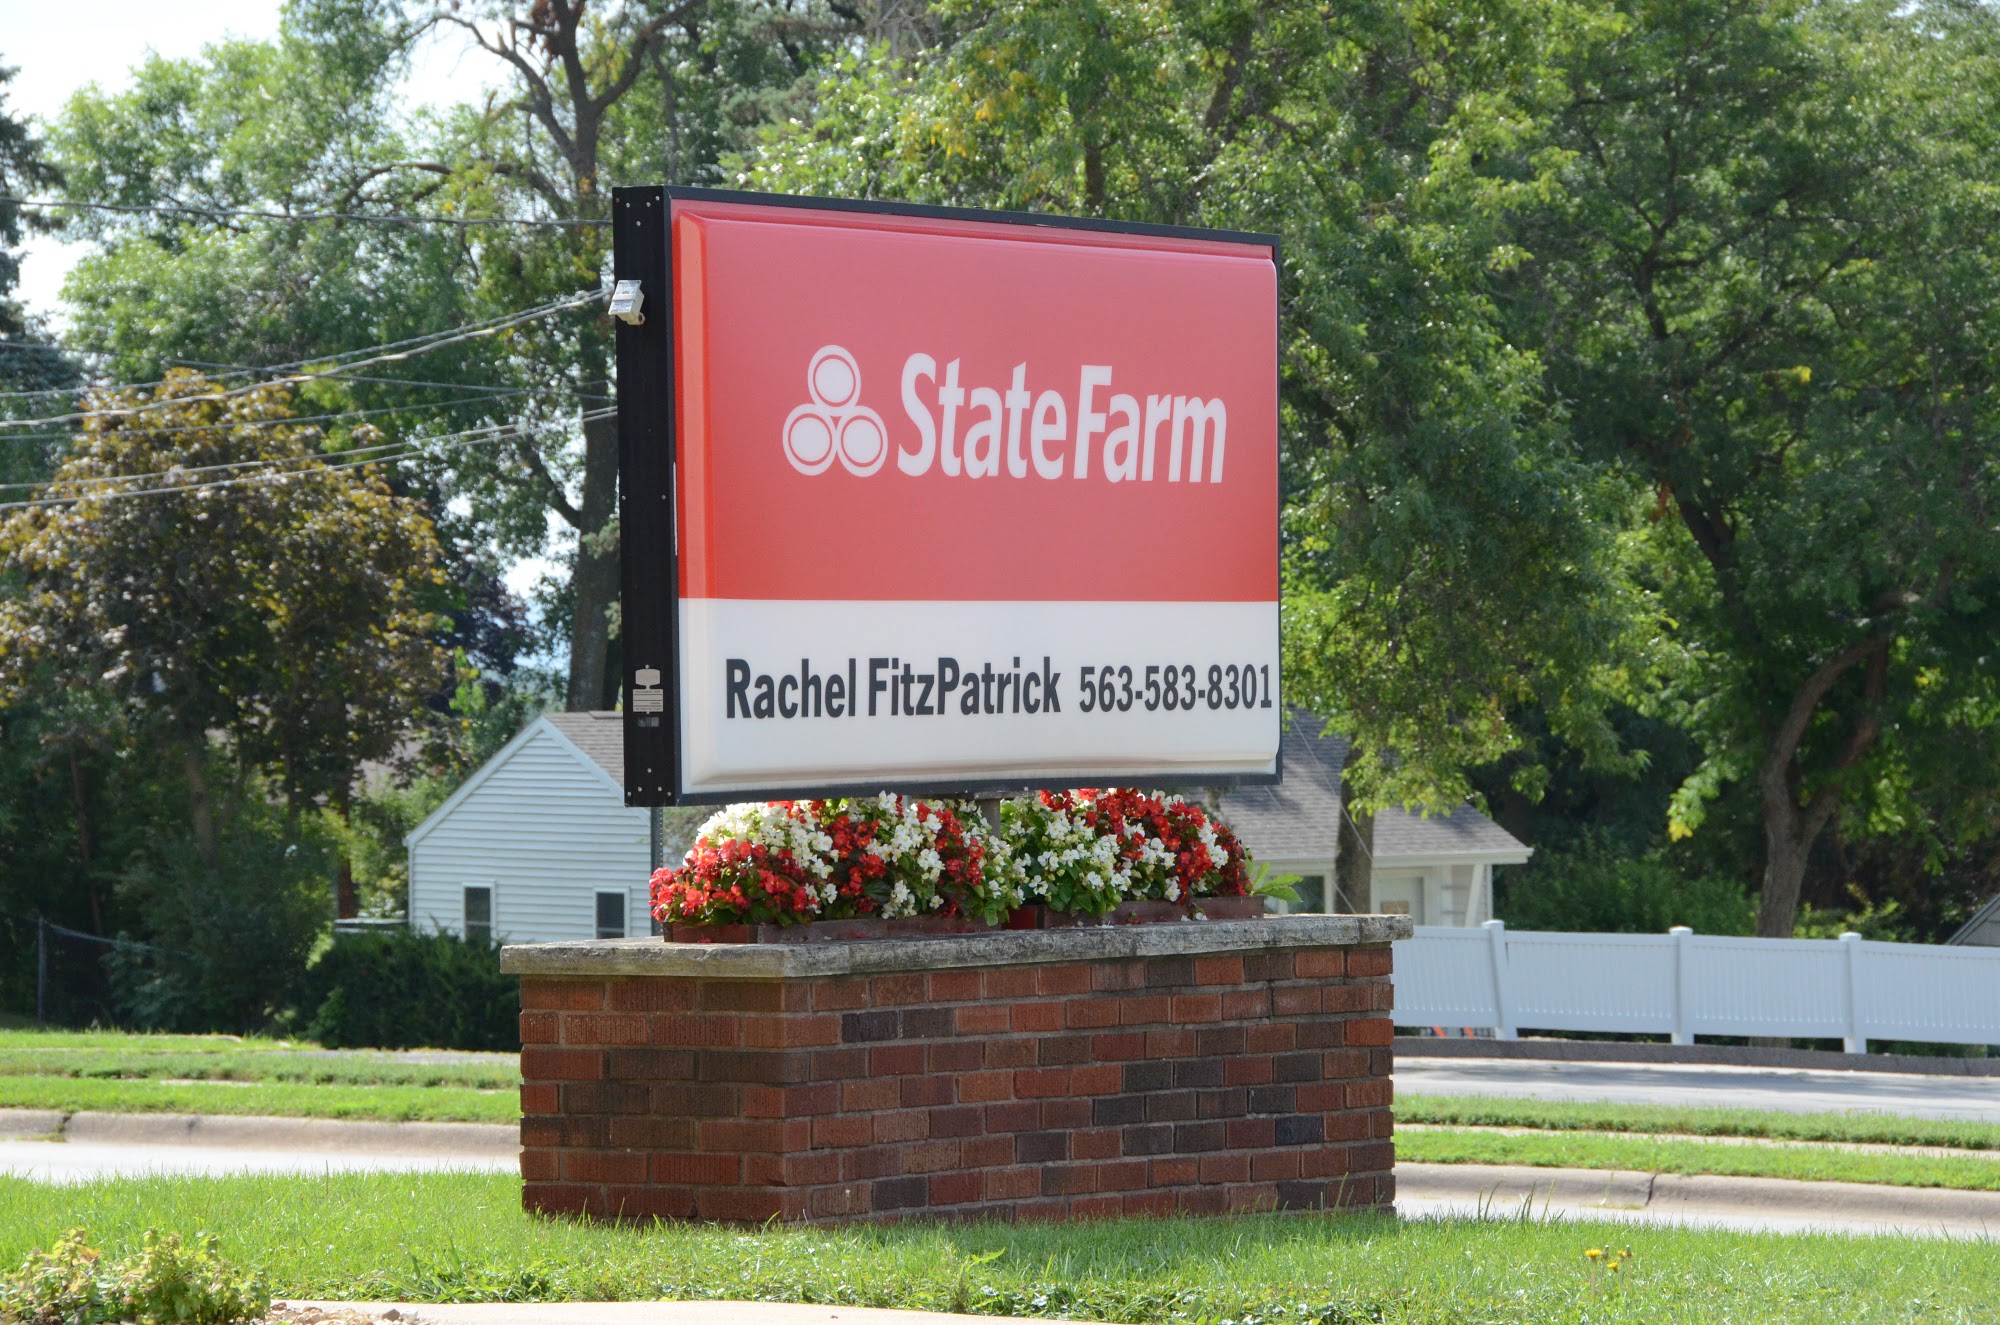 Rachel FitzPatrick - State Farm Insurance Agent